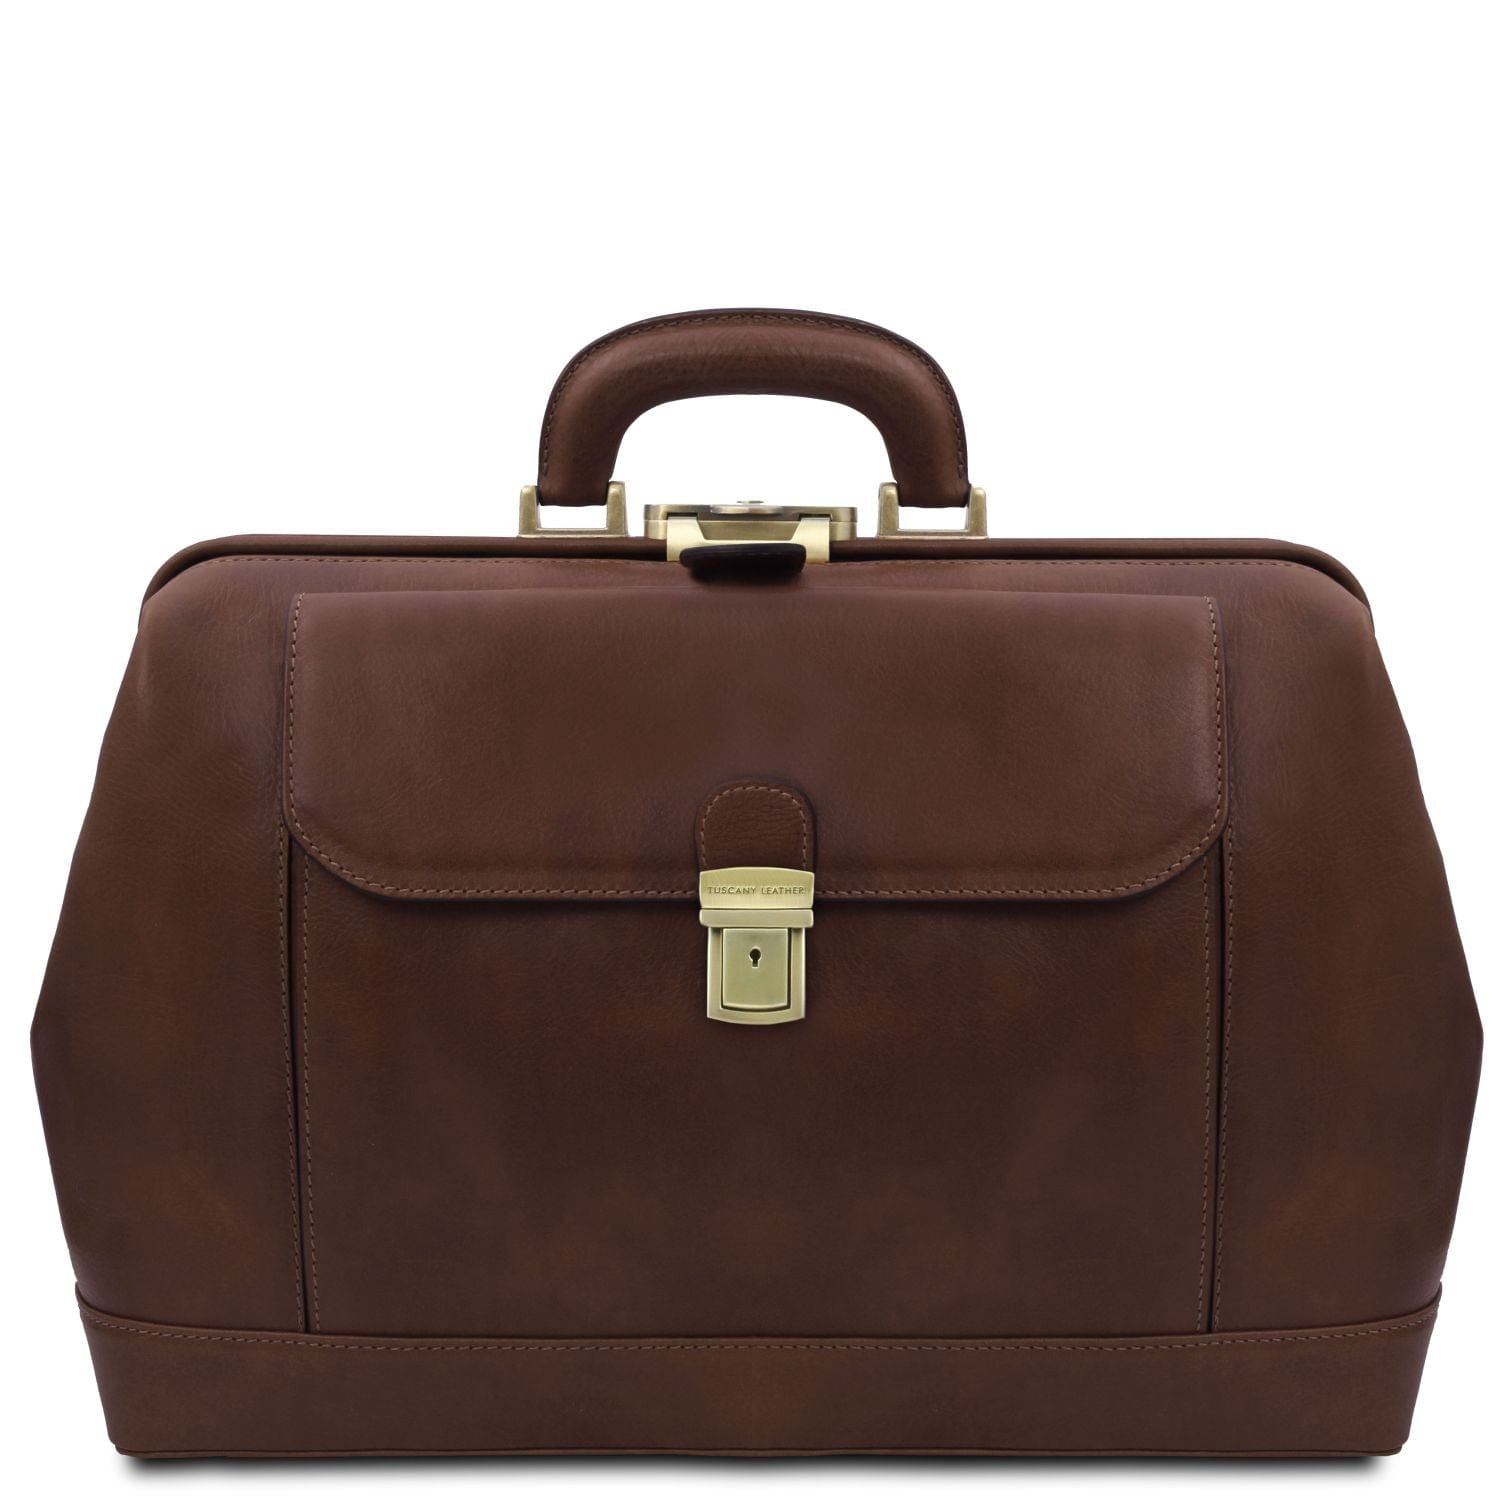 Leonardo - Exclusive leather doctor bag | TL142342 - Premium Doctor bags - Shop now at San Rocco Italia